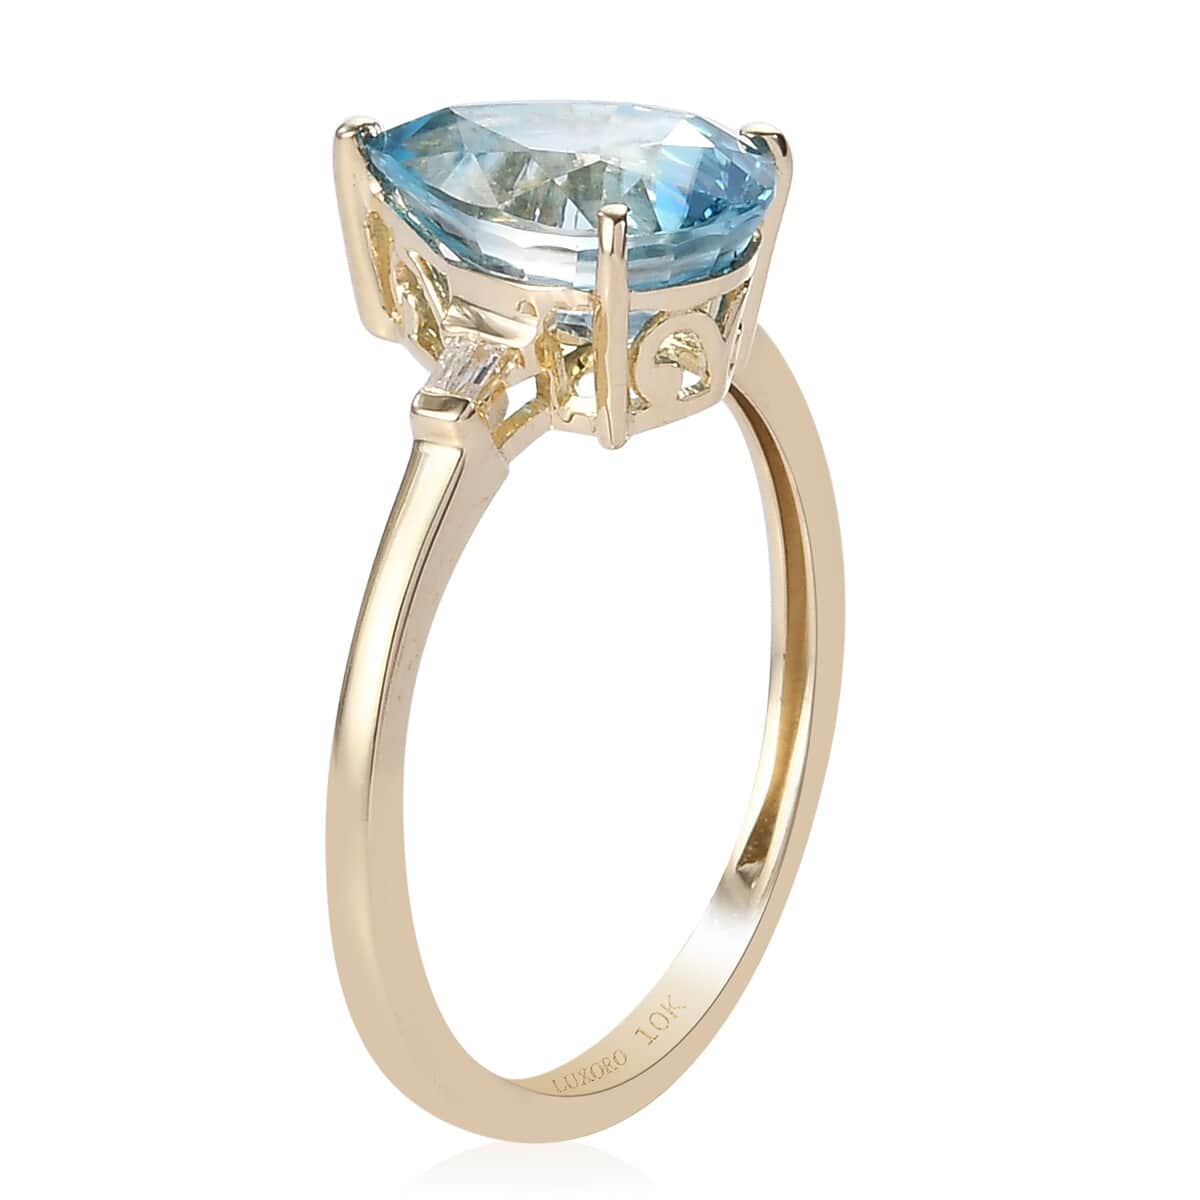 LUXORO Premium Ratanakiri Blue Zircon and Diamond Ring in 10K Yellow Gold (Size 9.0) 2.90 ctw image number 3